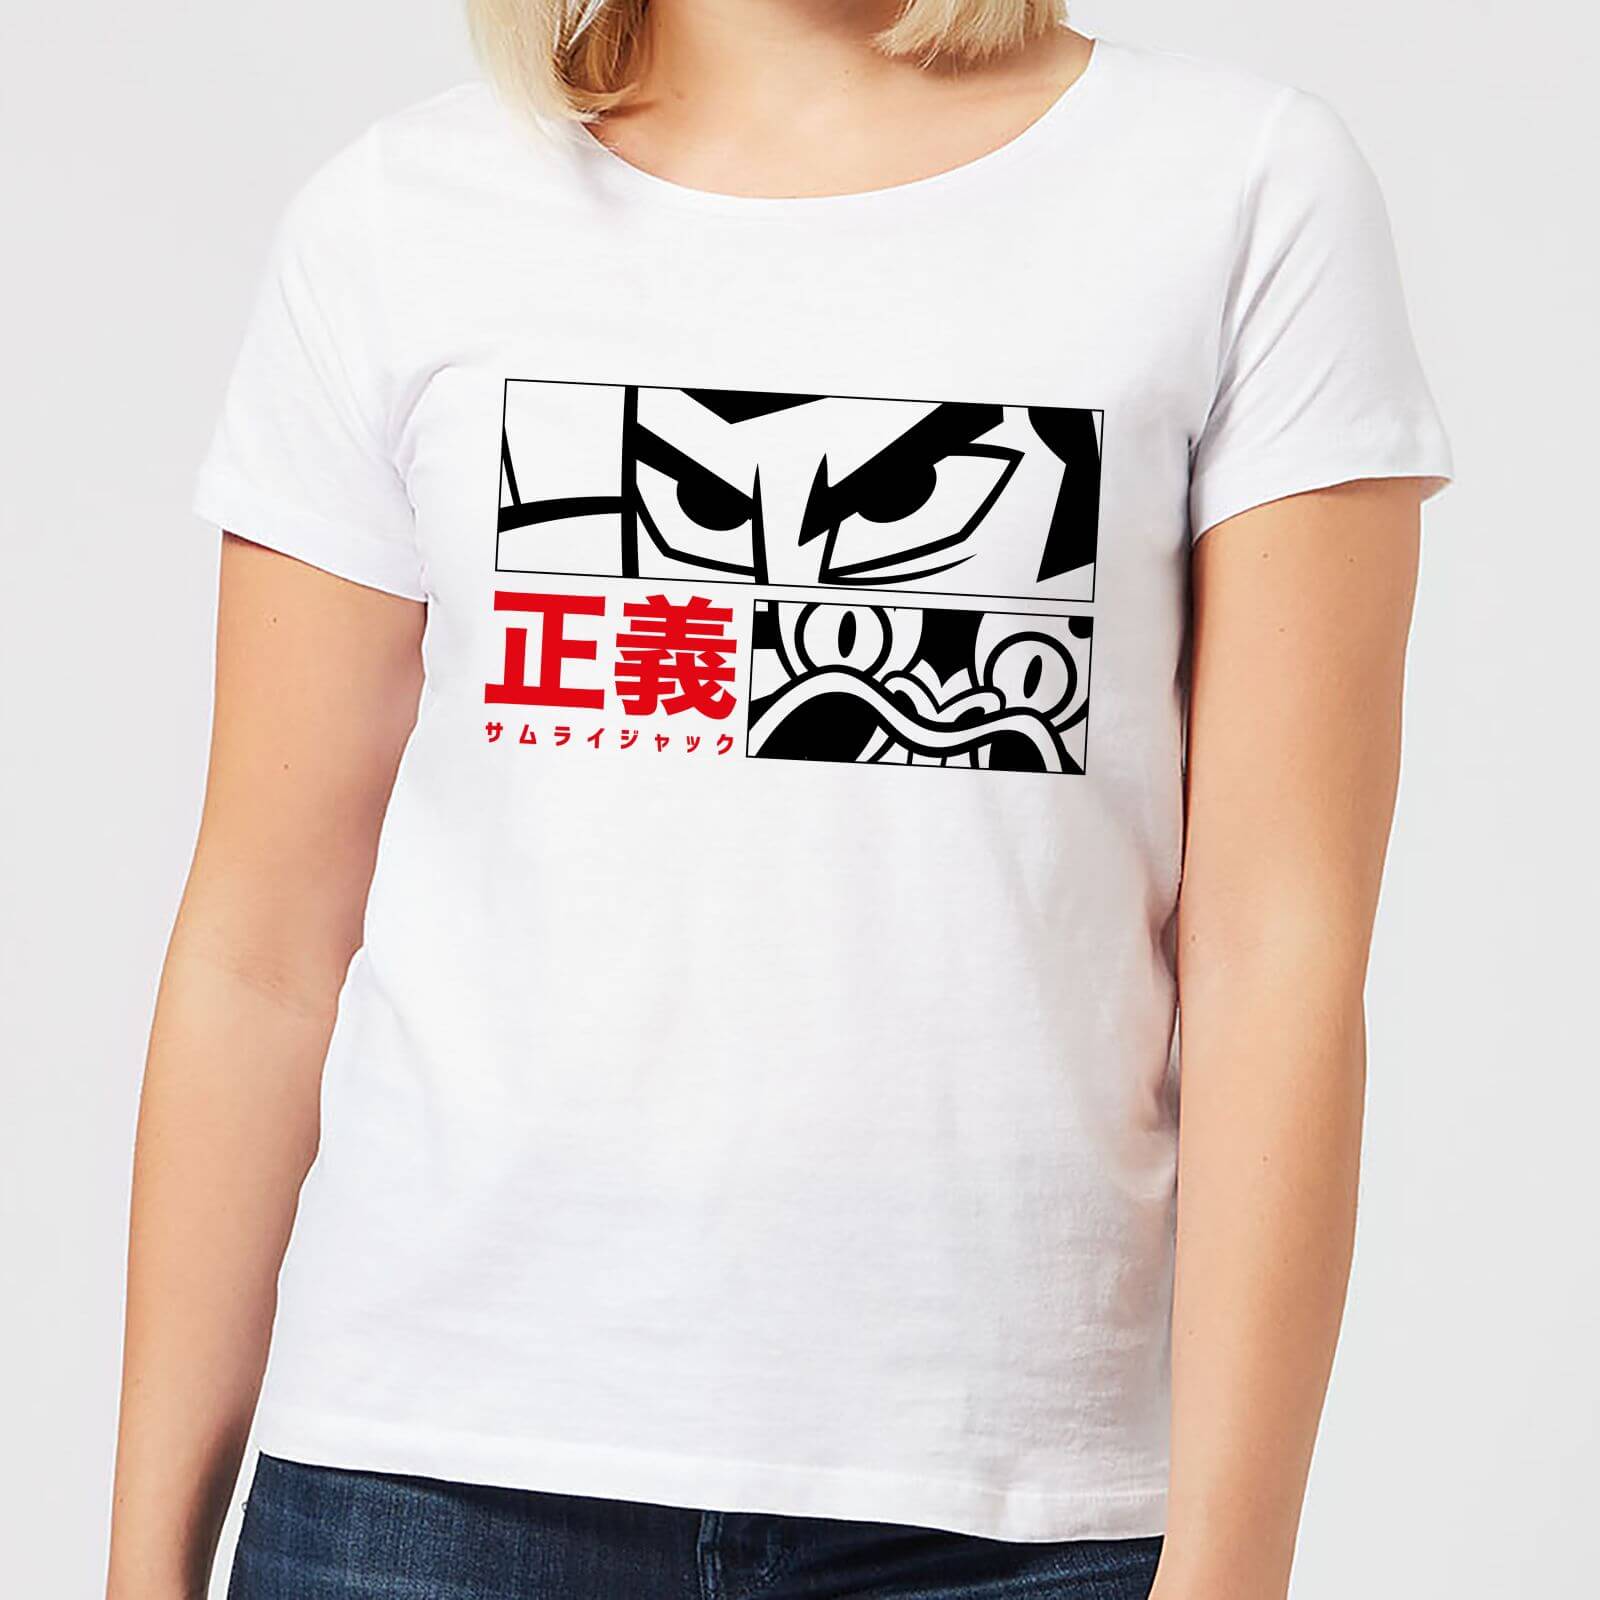 Samurai Jack Arch Nemesis Women's T-Shirt - White - S - White